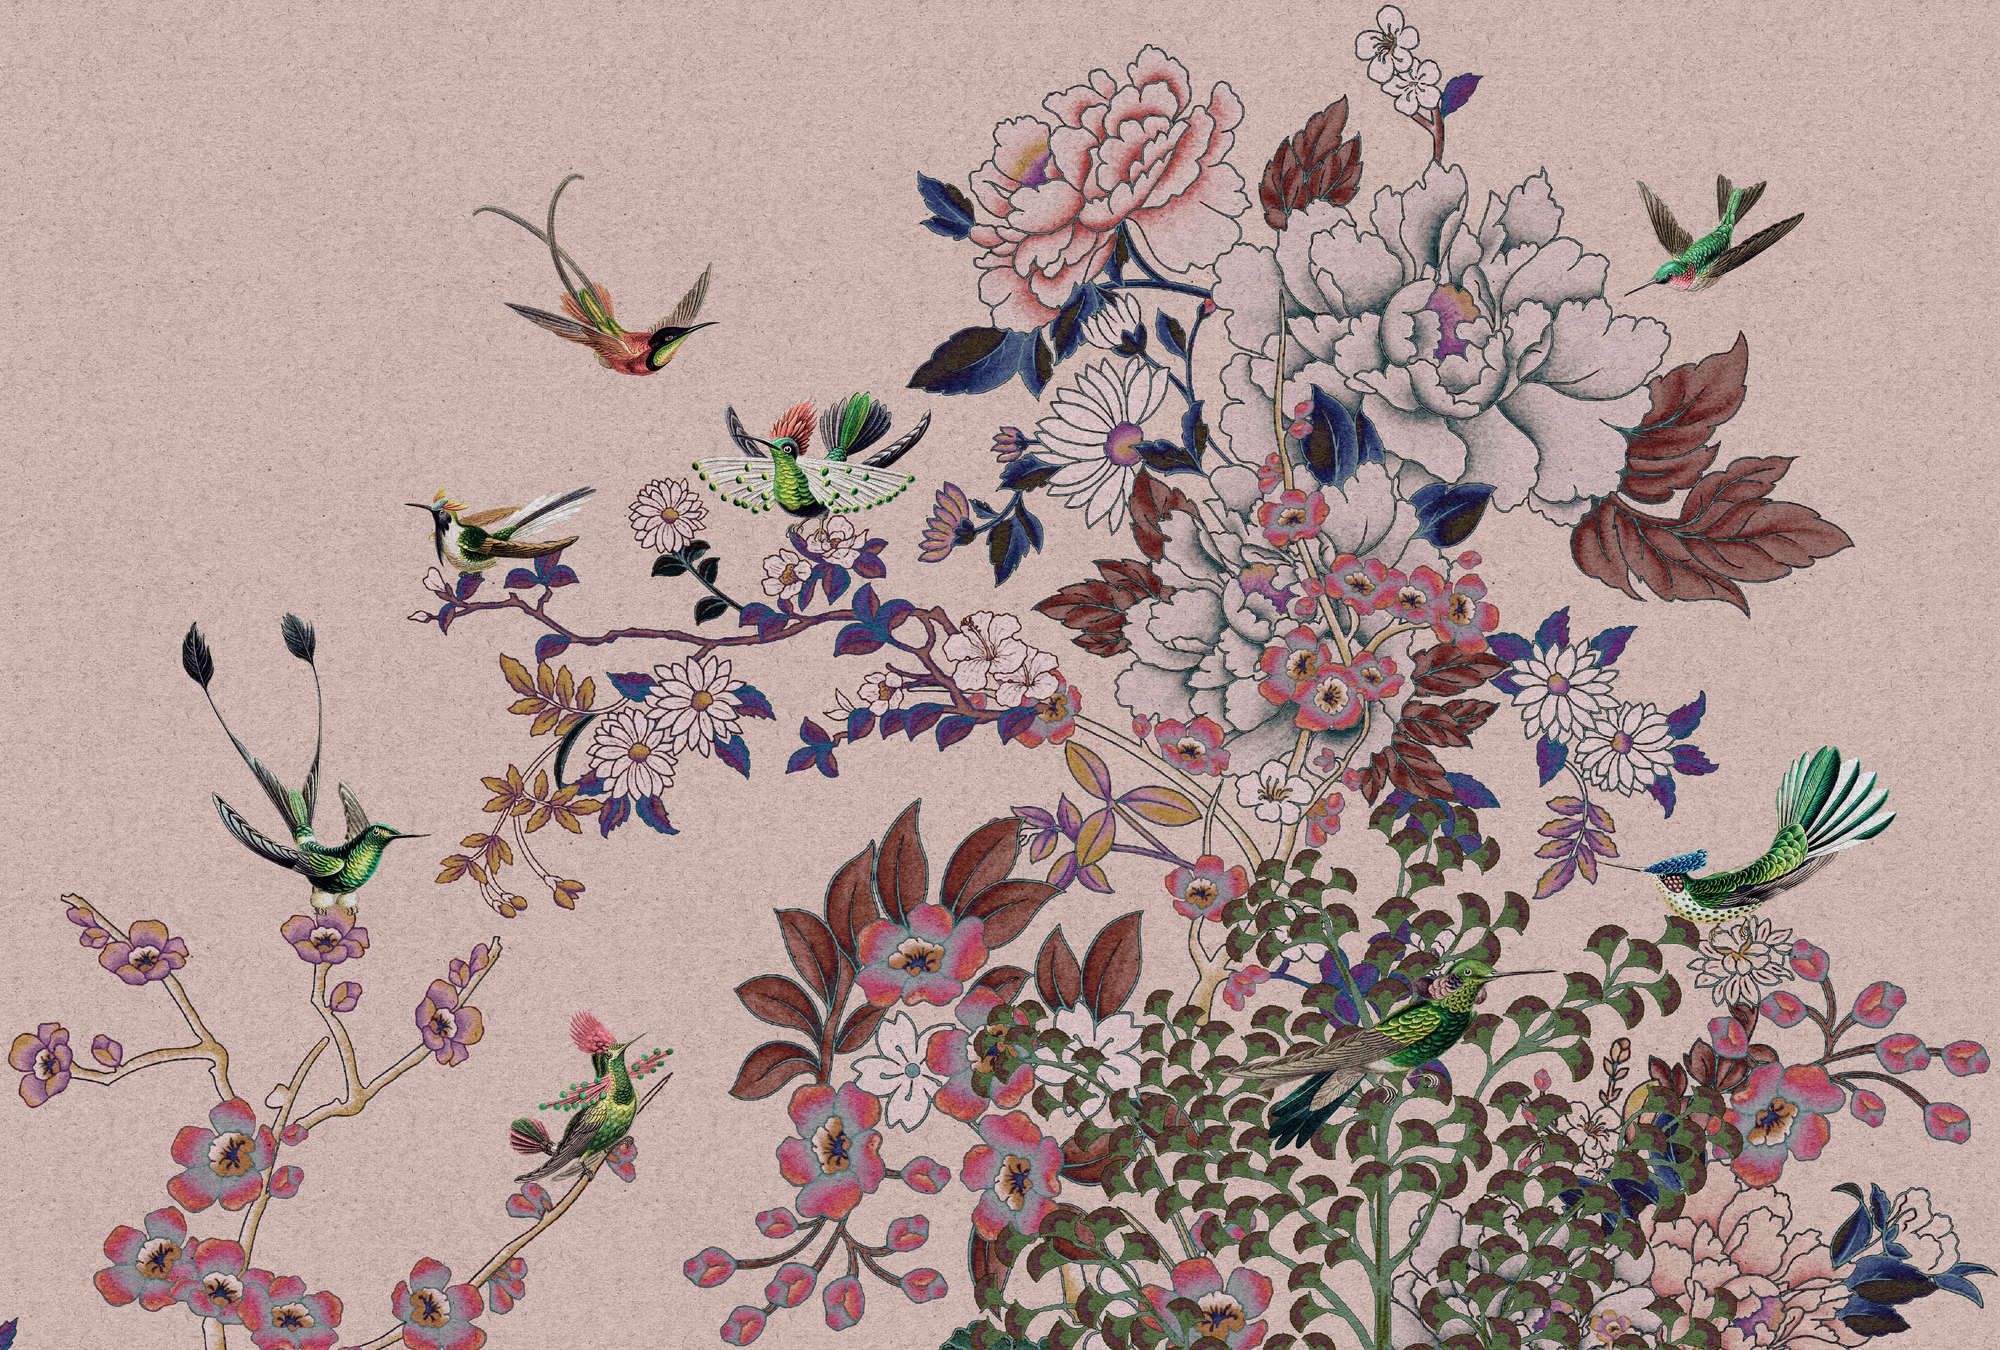             Photo wallpaper »madras 2« - Rose-coloured blossom motif with hummingbirds on kraft paper texture - Matt, smooth non-woven fabric
        